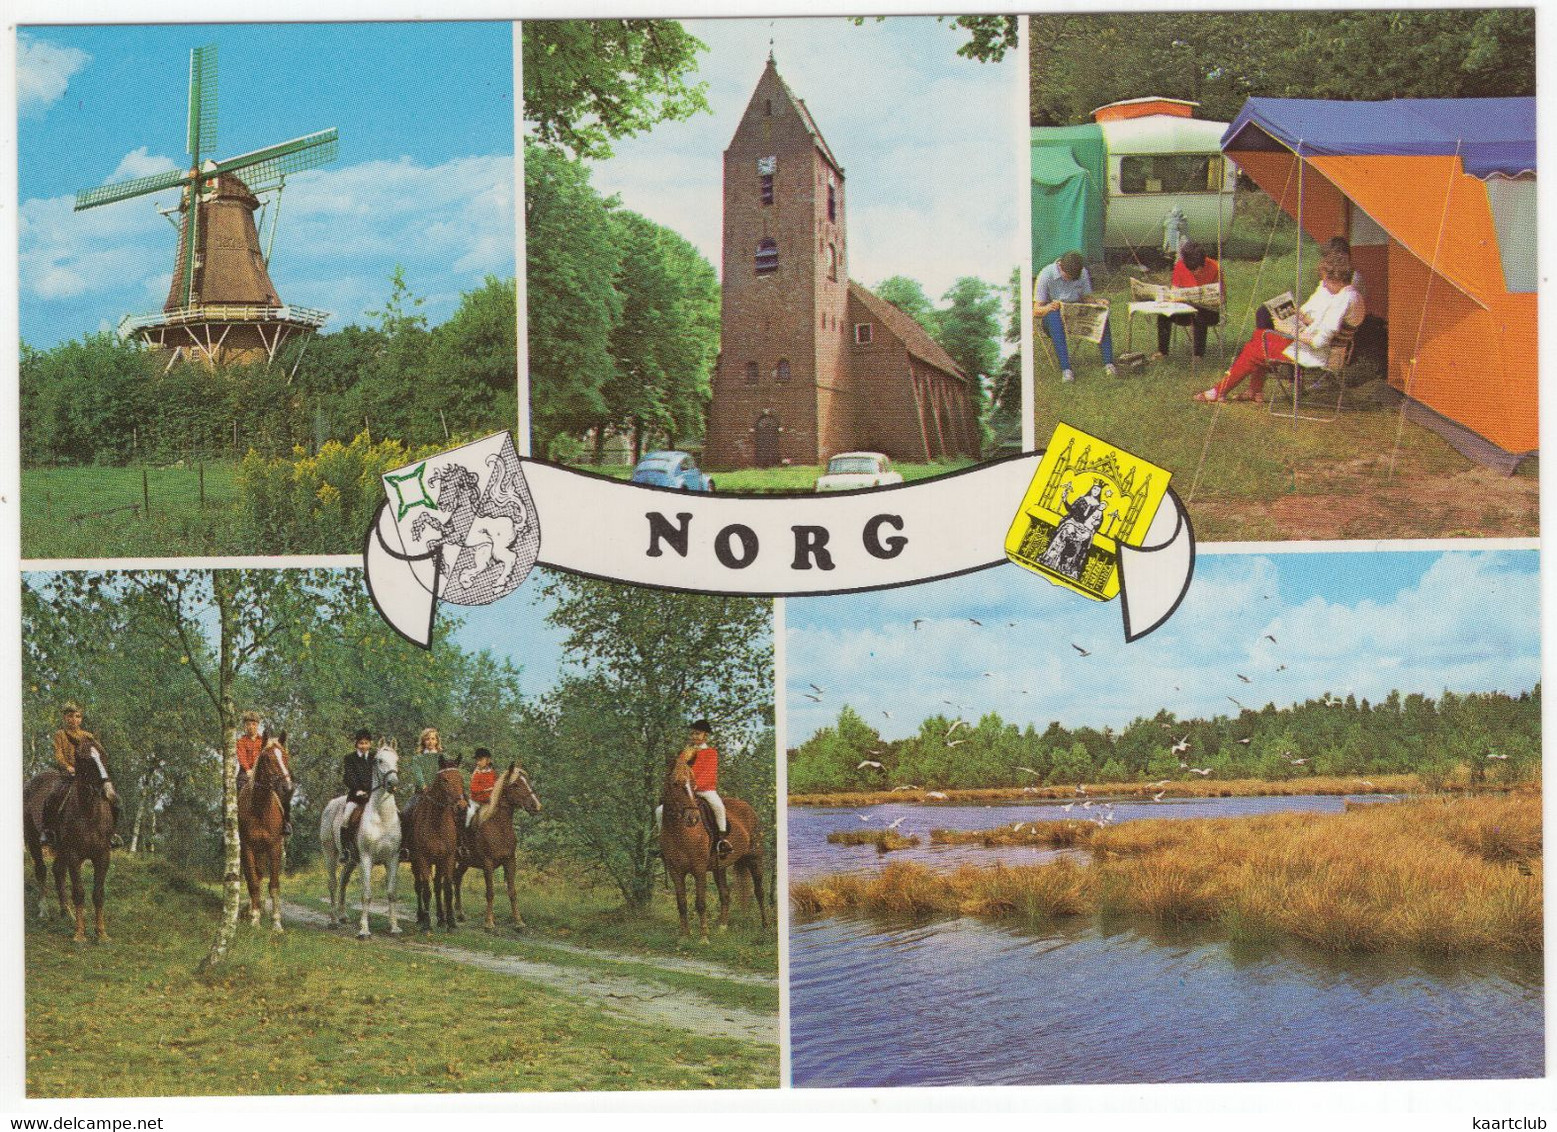 Norg - Molen, Camping, Paarden, Ruiters -  (Drenthe, Holland) - Nr. NOG 1 - 184 - Norg